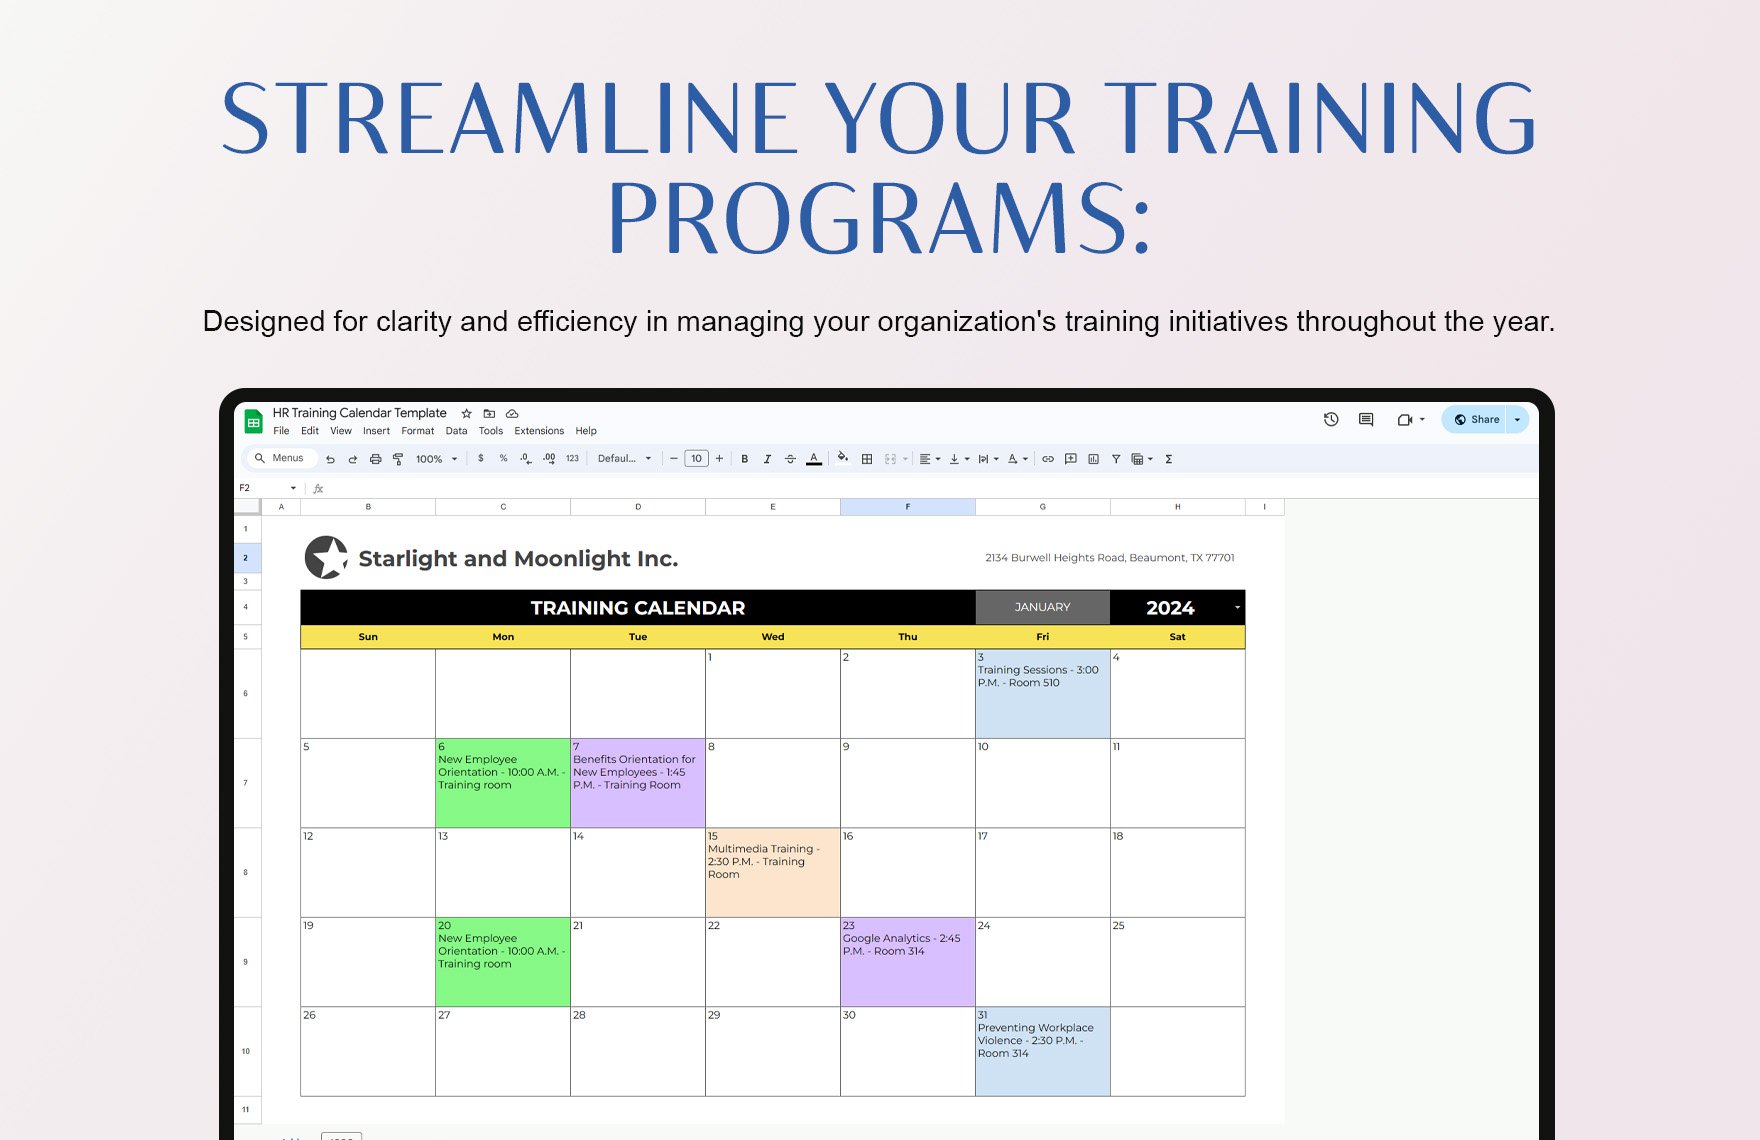 HR Training Calendar Template